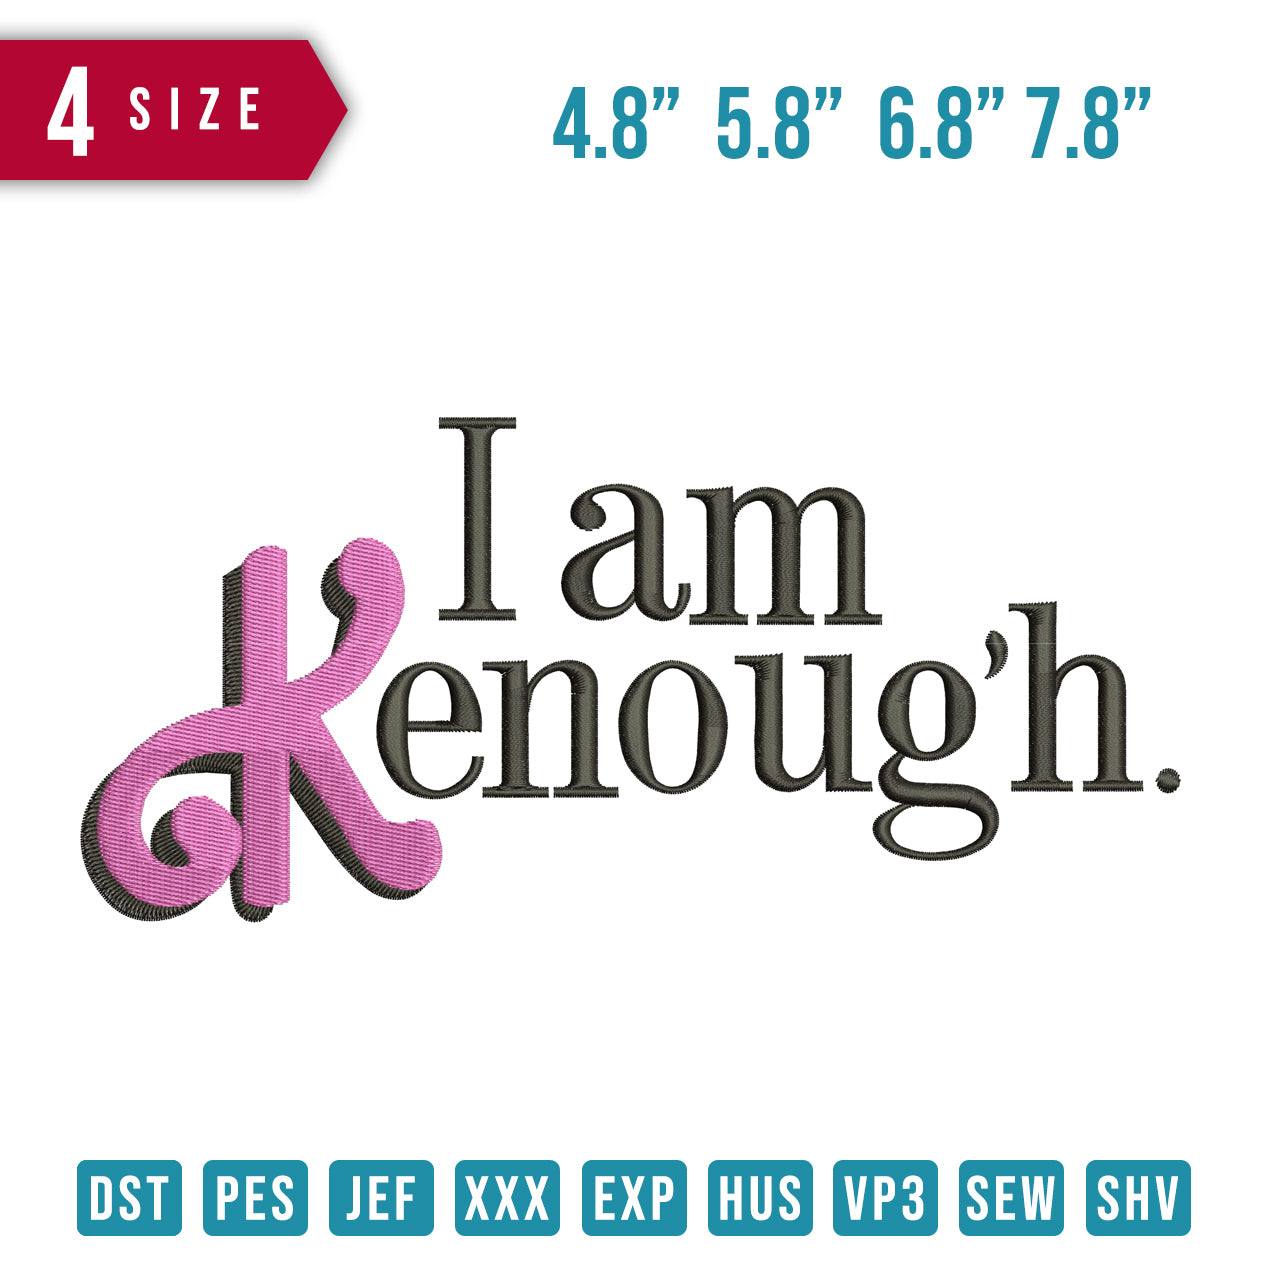 i'am Kenough